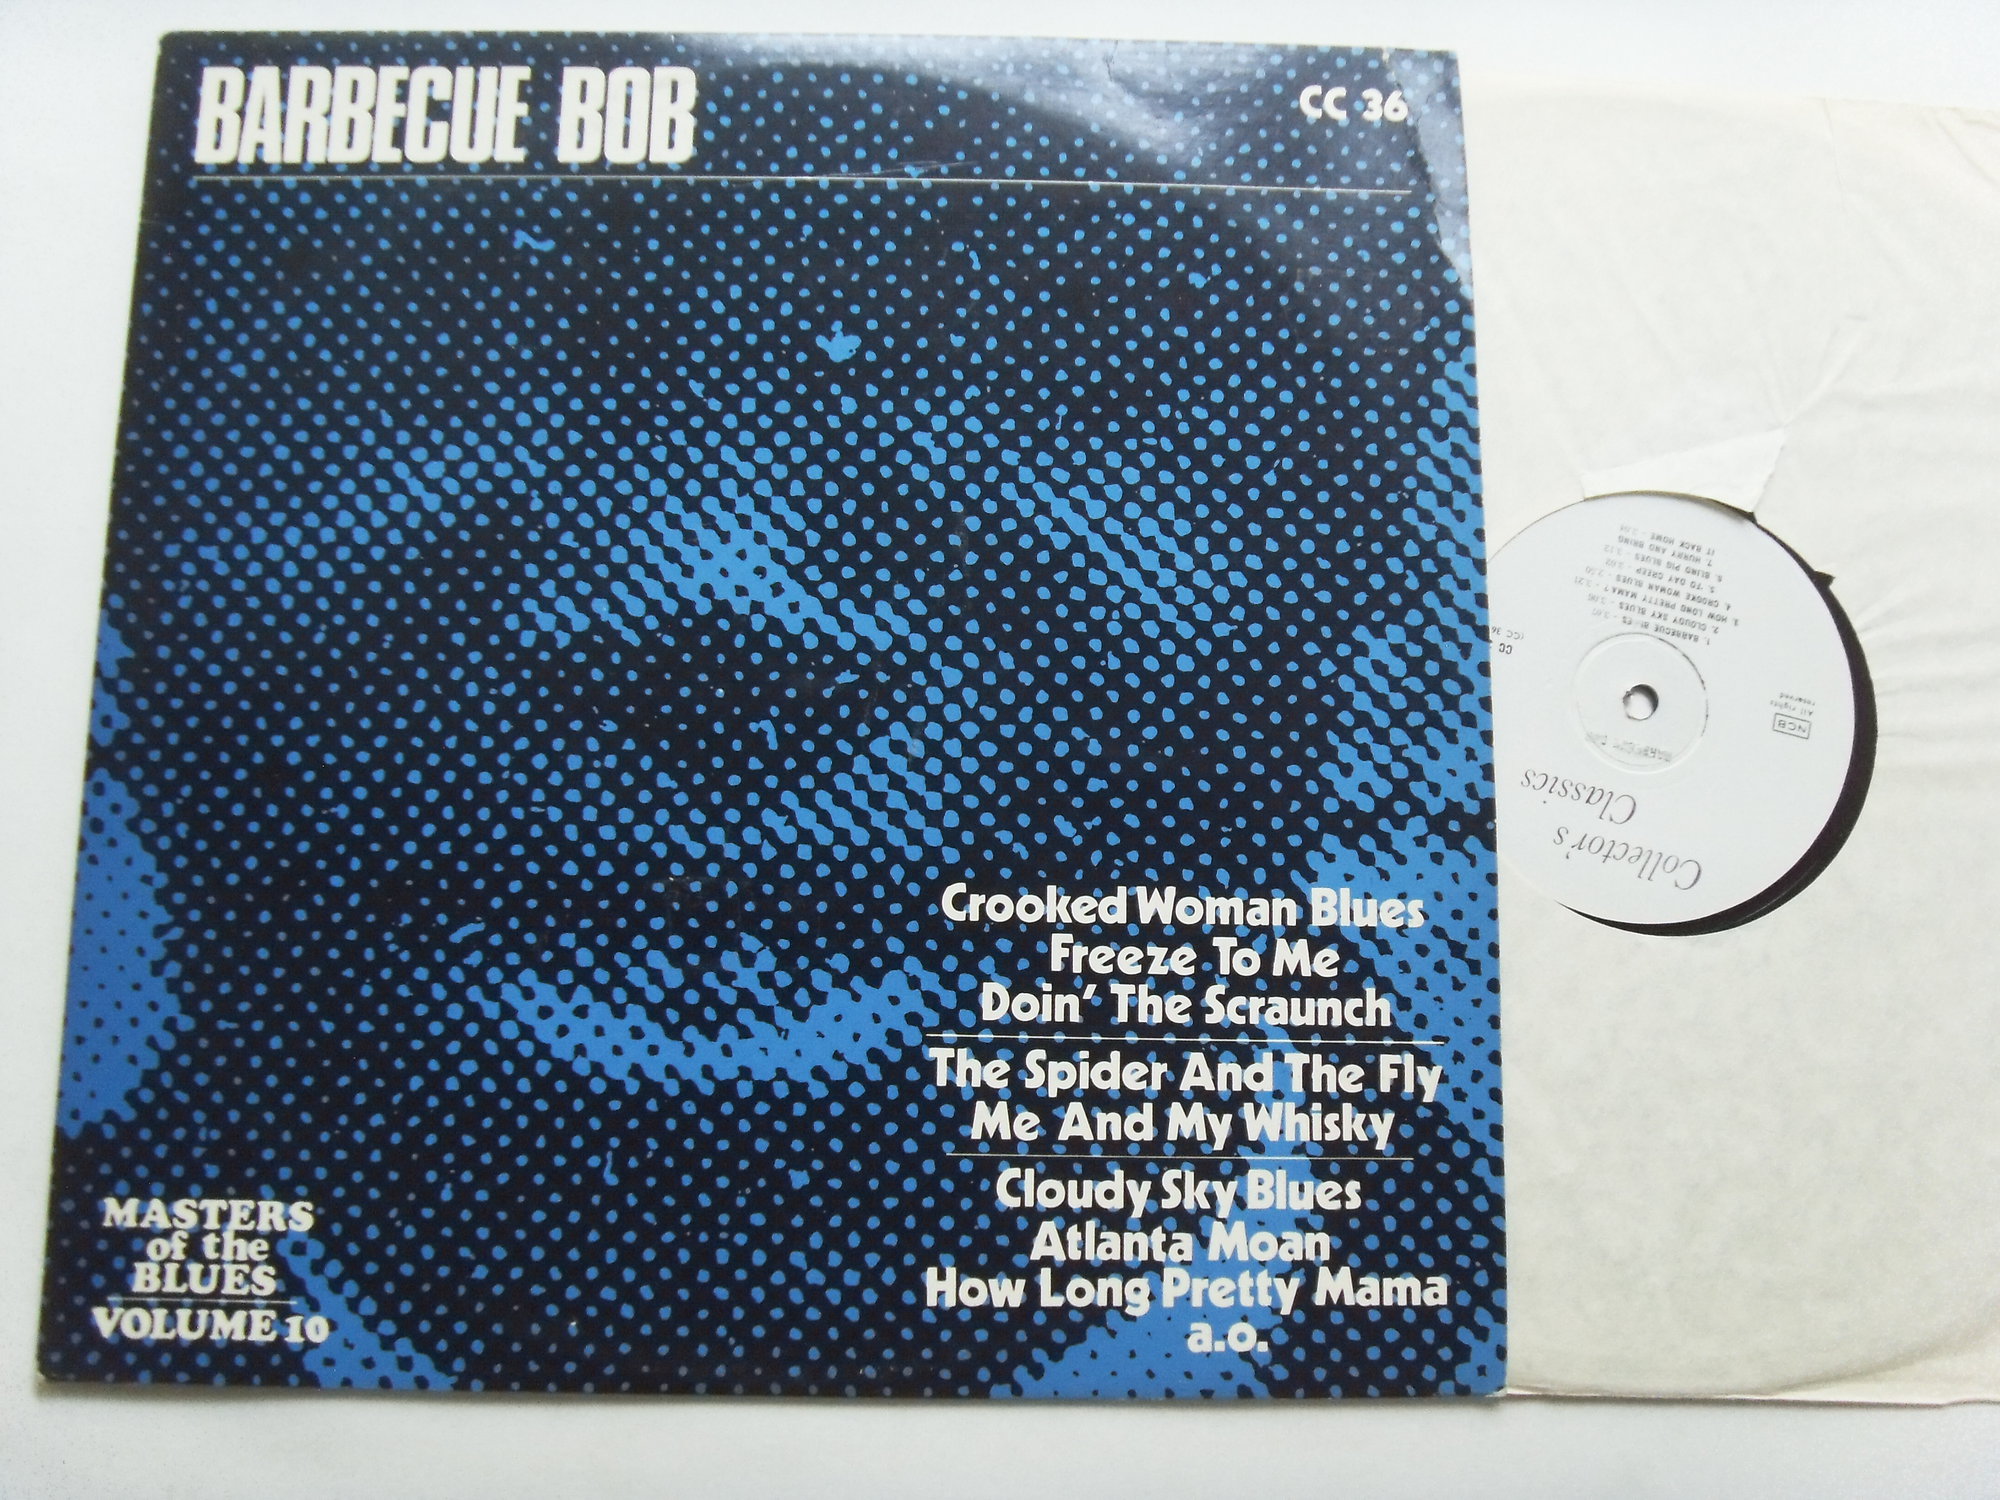 Bob BARBECUE Masters of the blues Vol.10